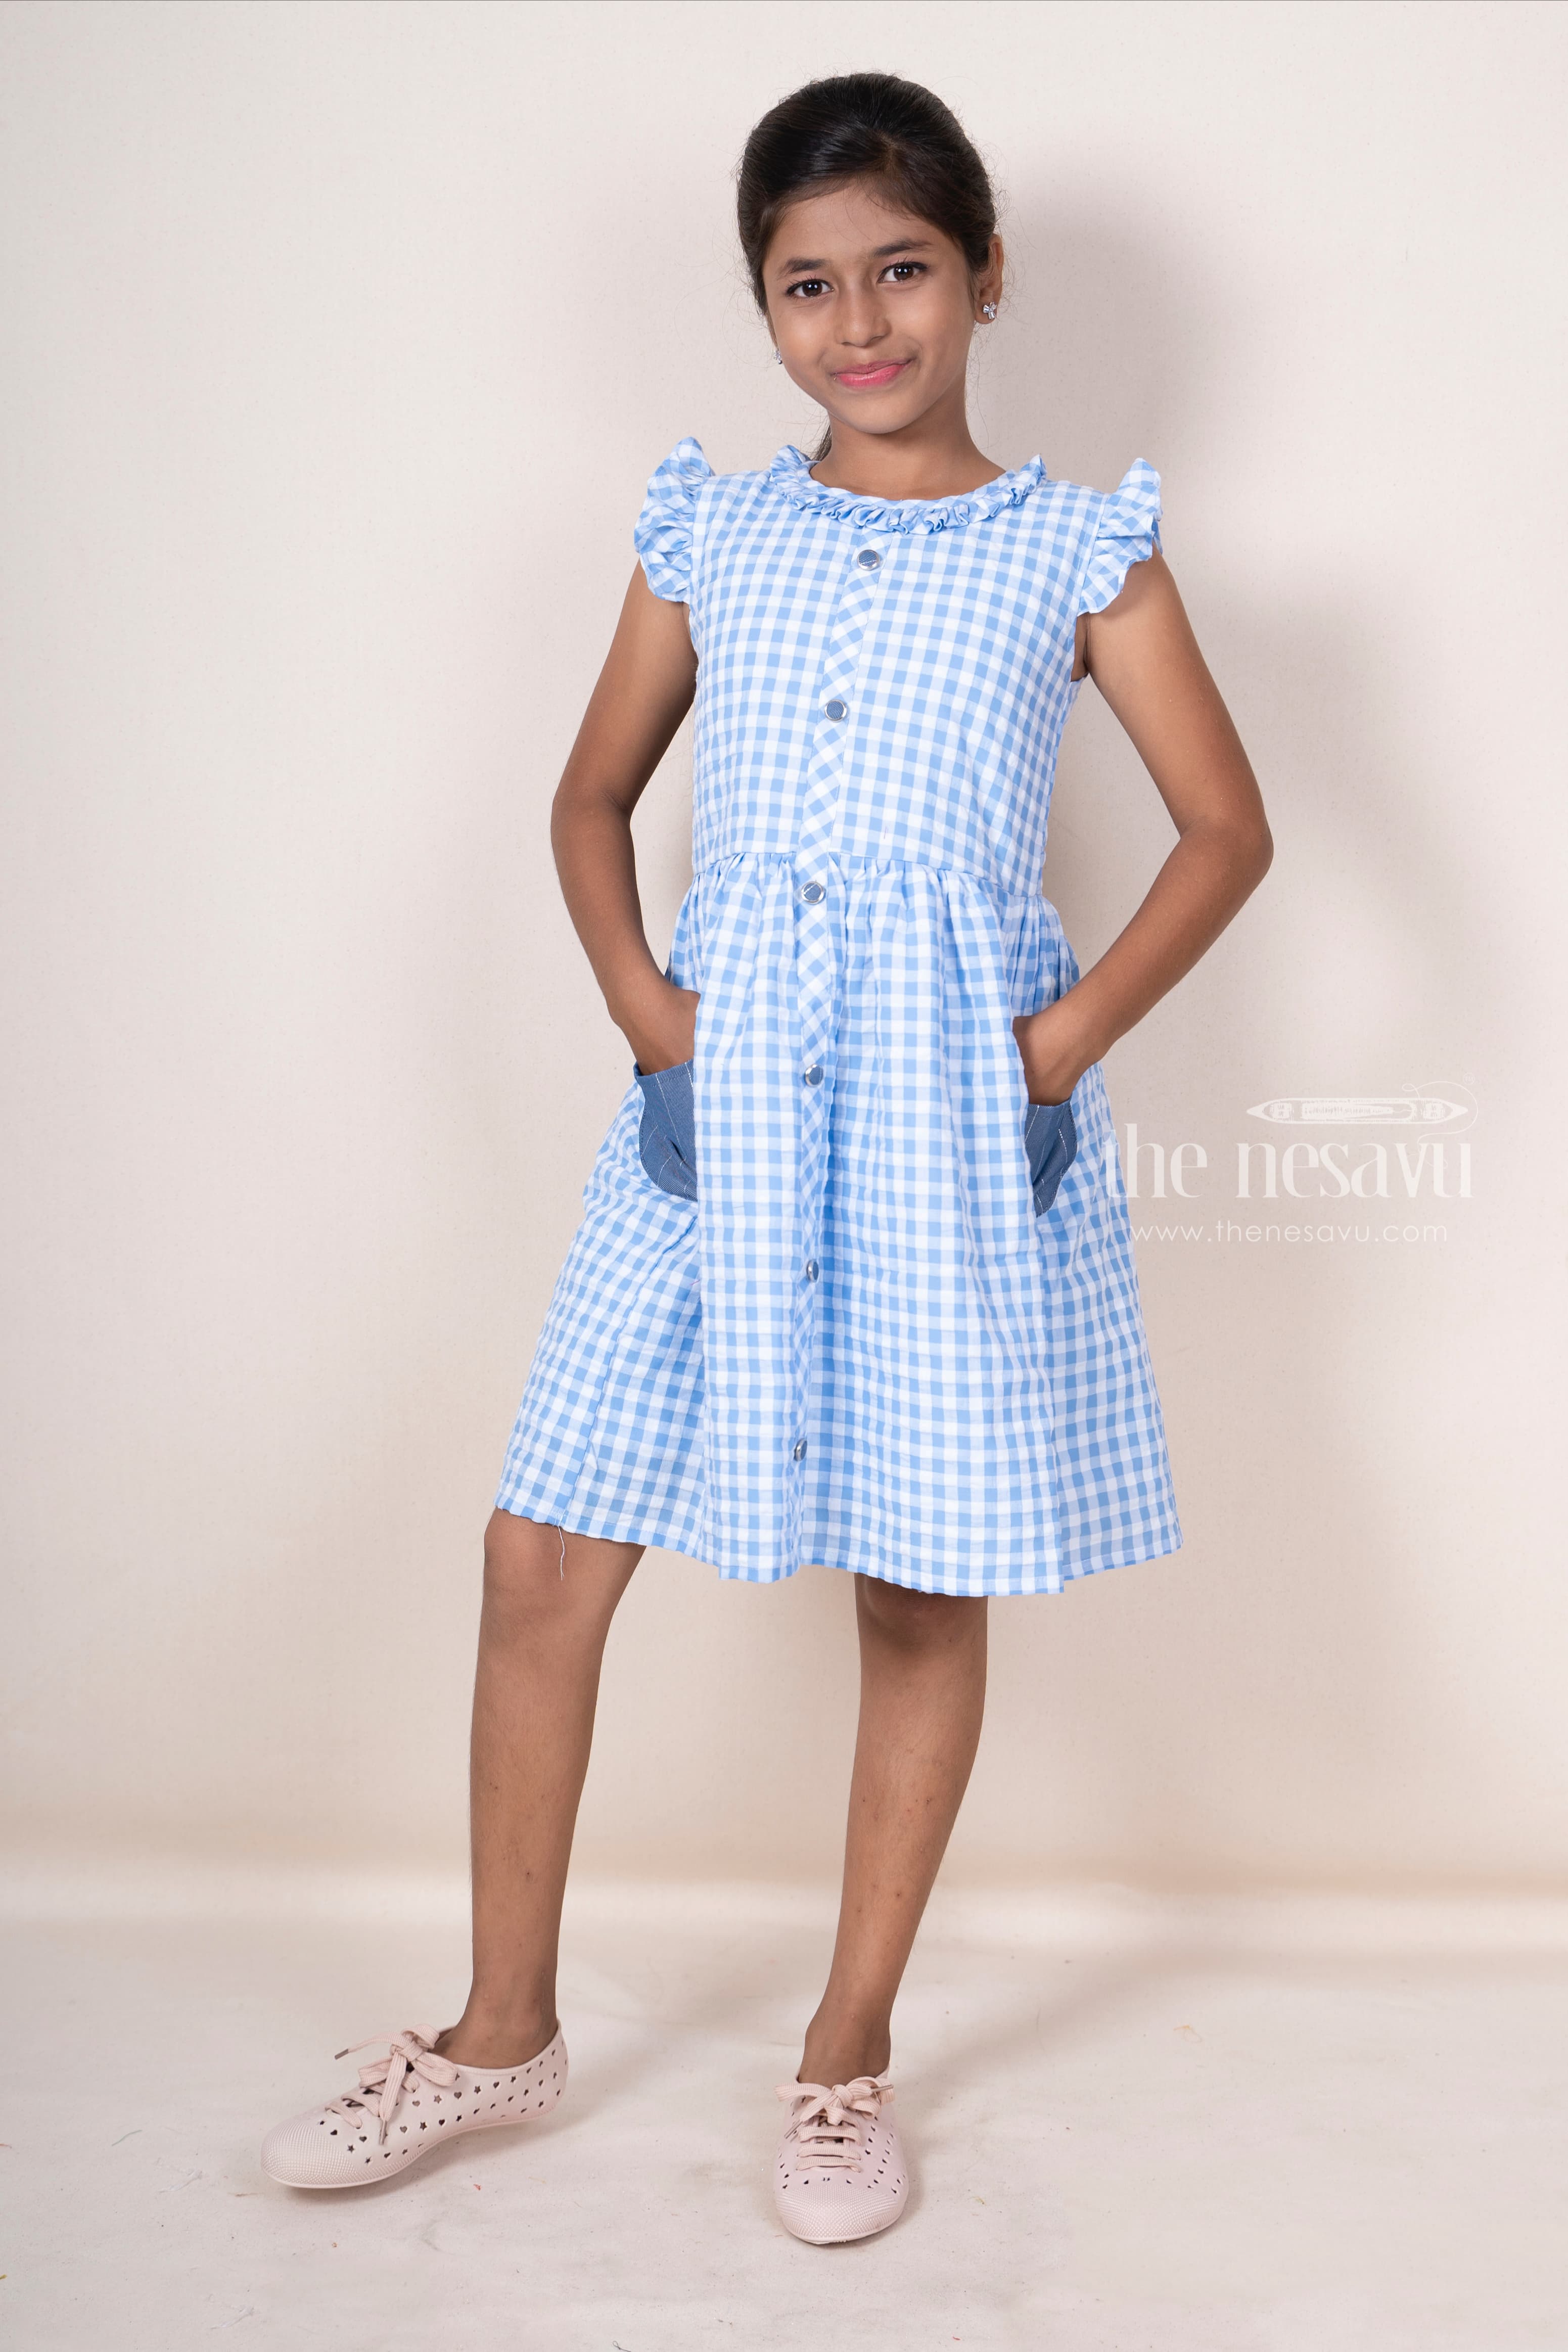 Source New style 100 cotton latest fashion soft casual check dress  patterns design on malibabacom